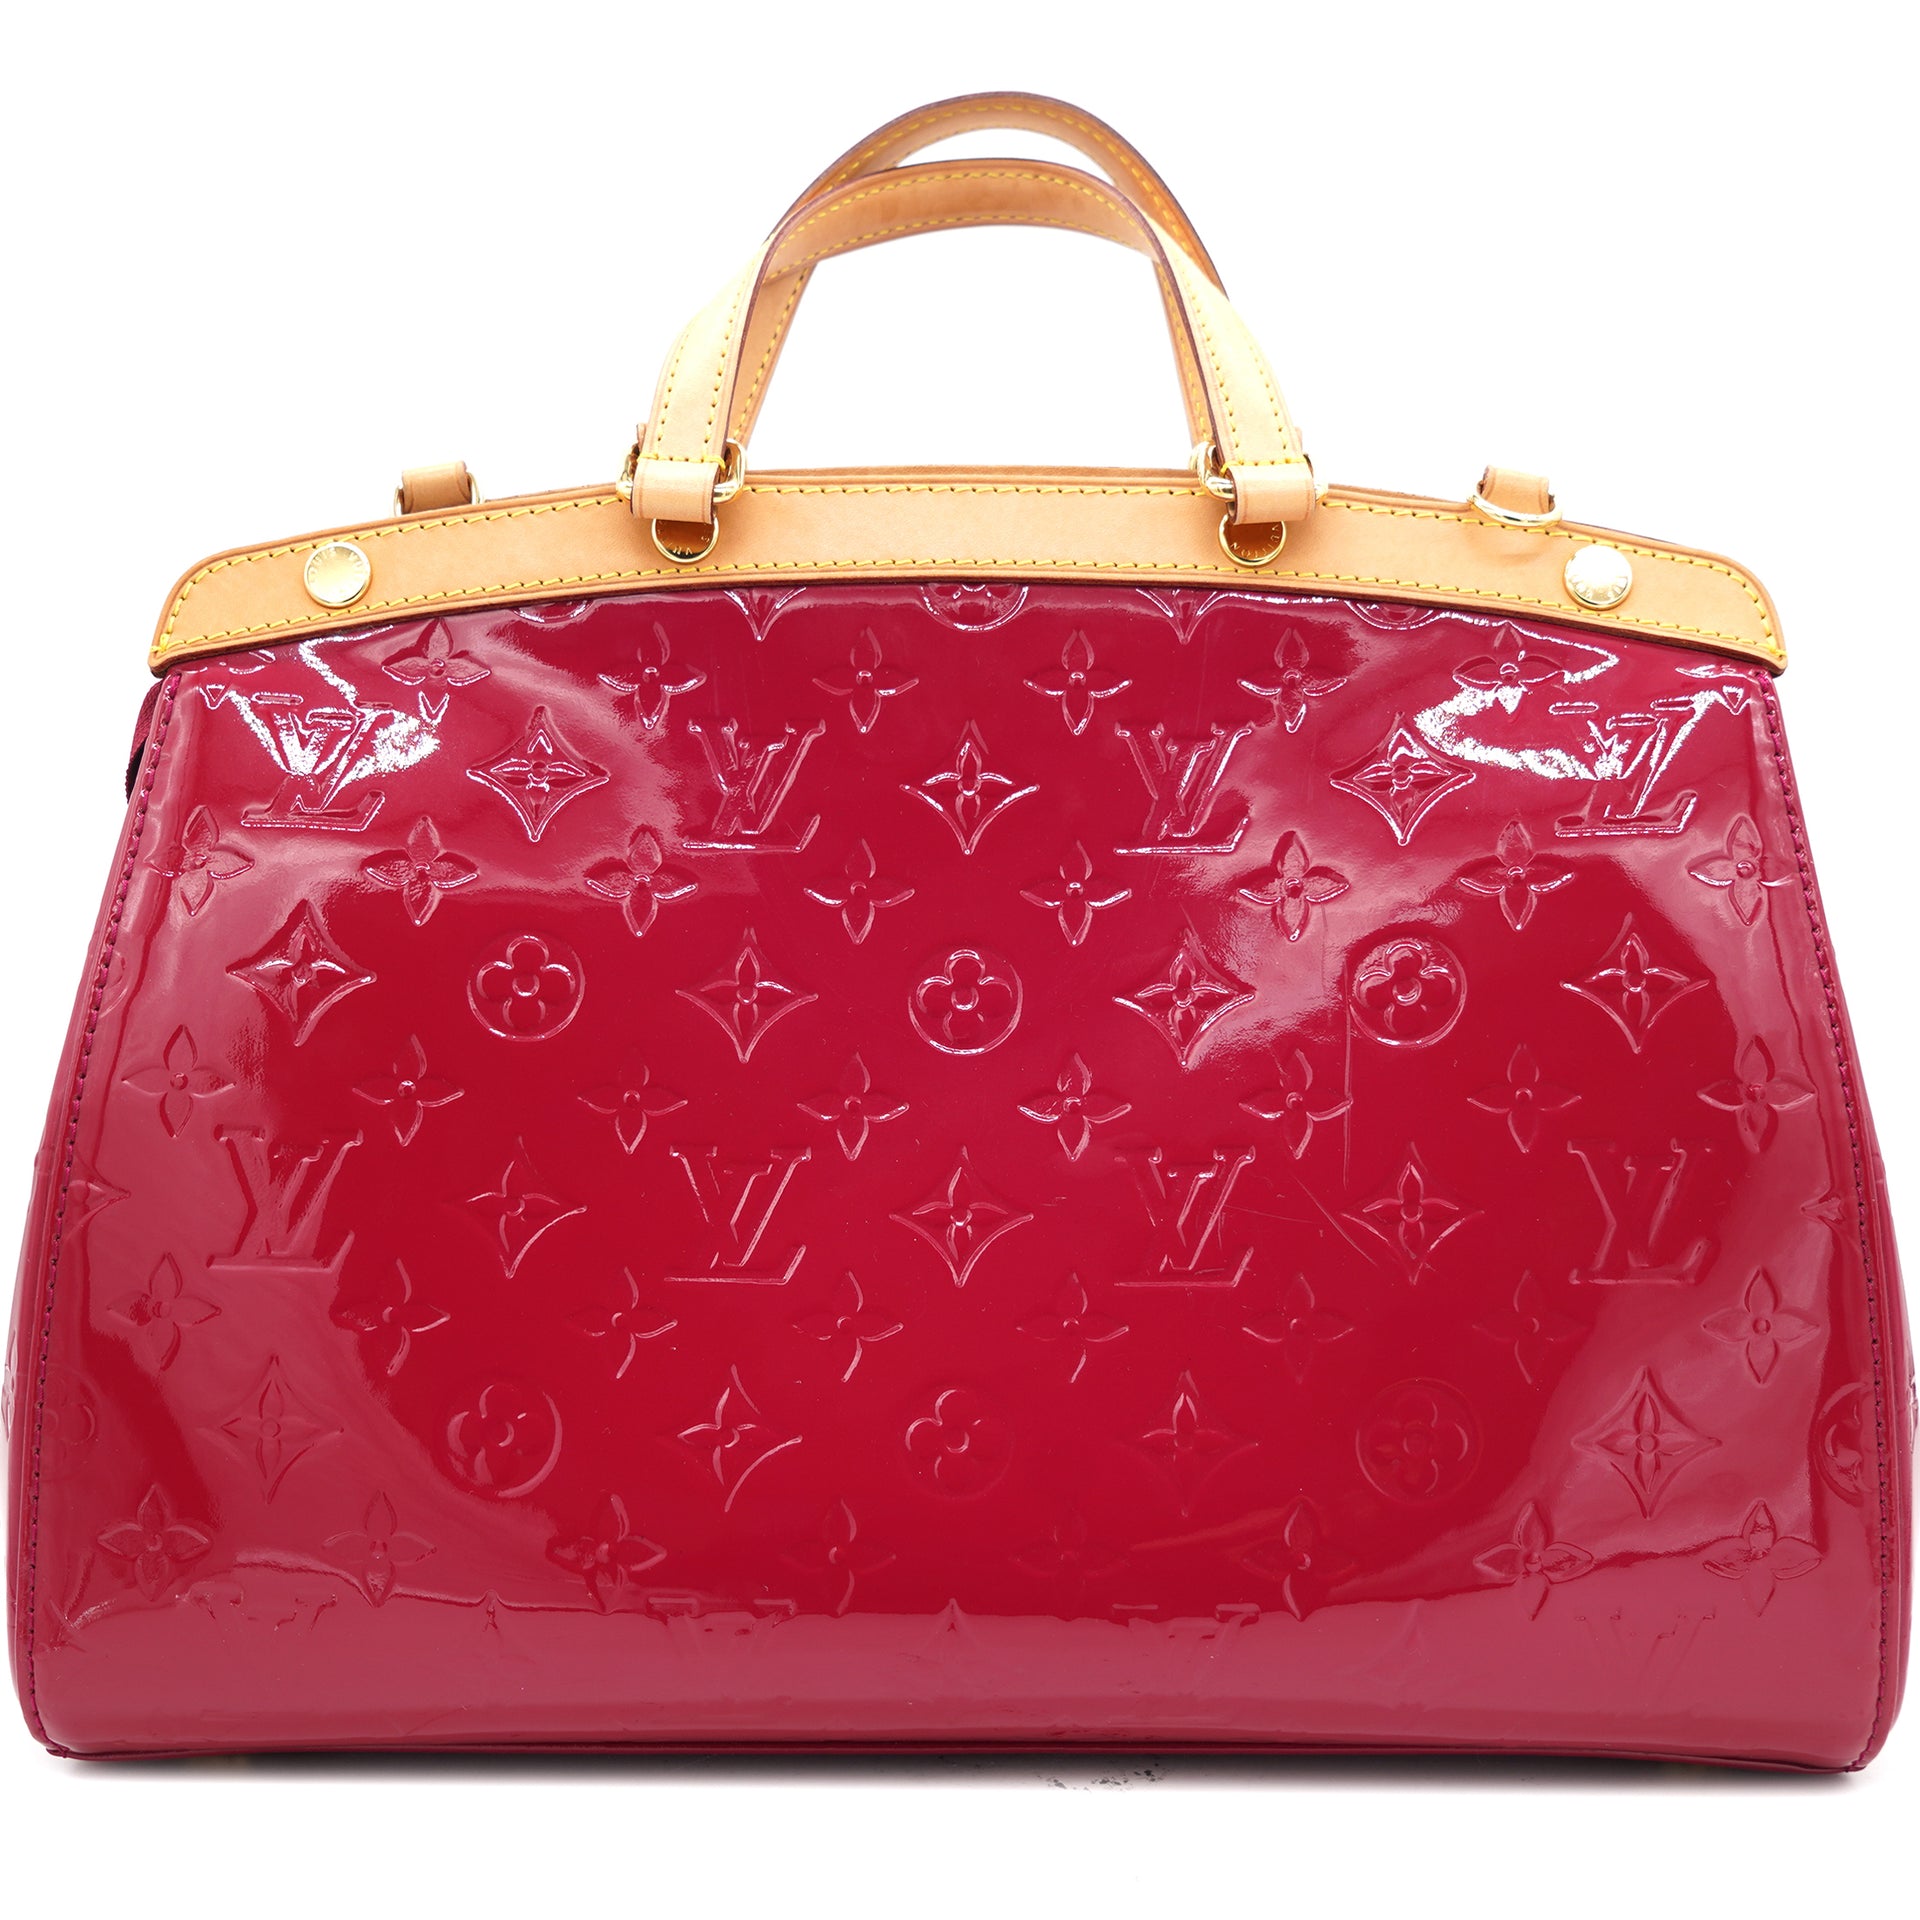 Louis Vuitton Brea MM in Rose Indien Vernis - SOLD